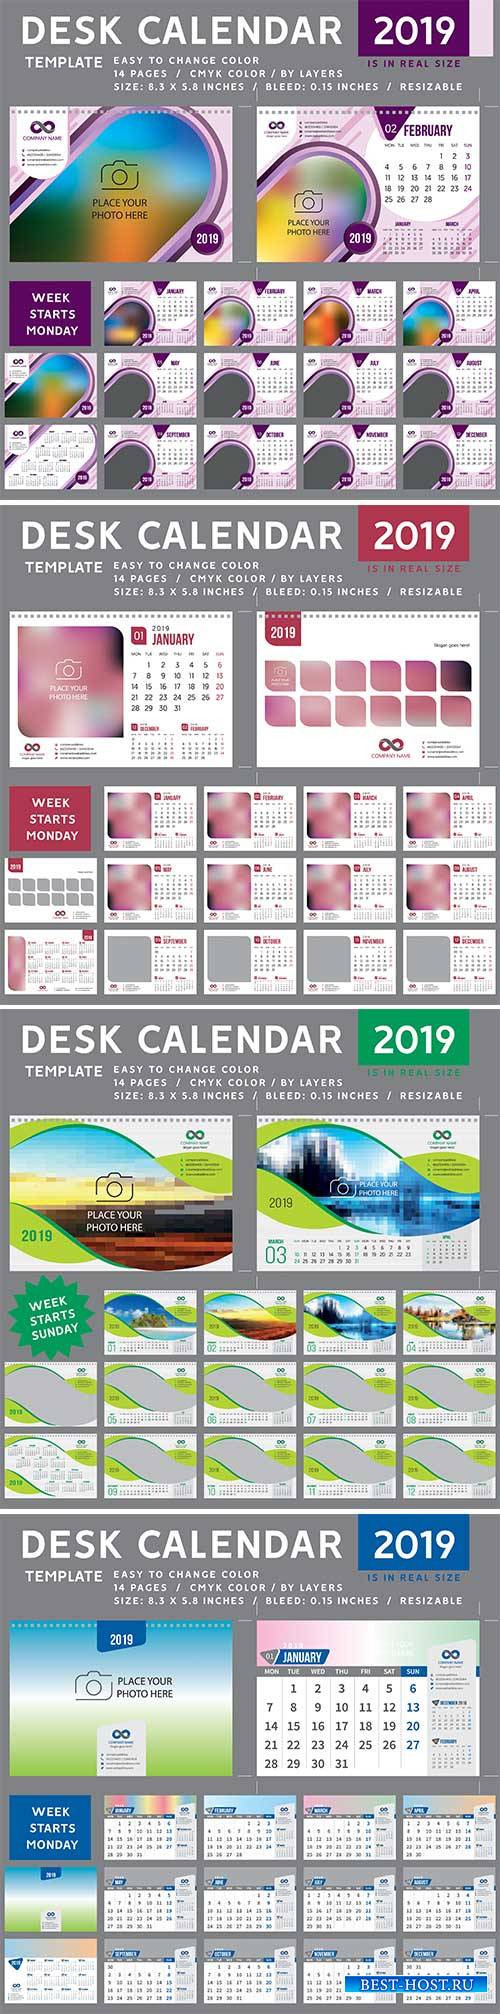 Desk Calendar 2019 vector template, 12 months included # 2